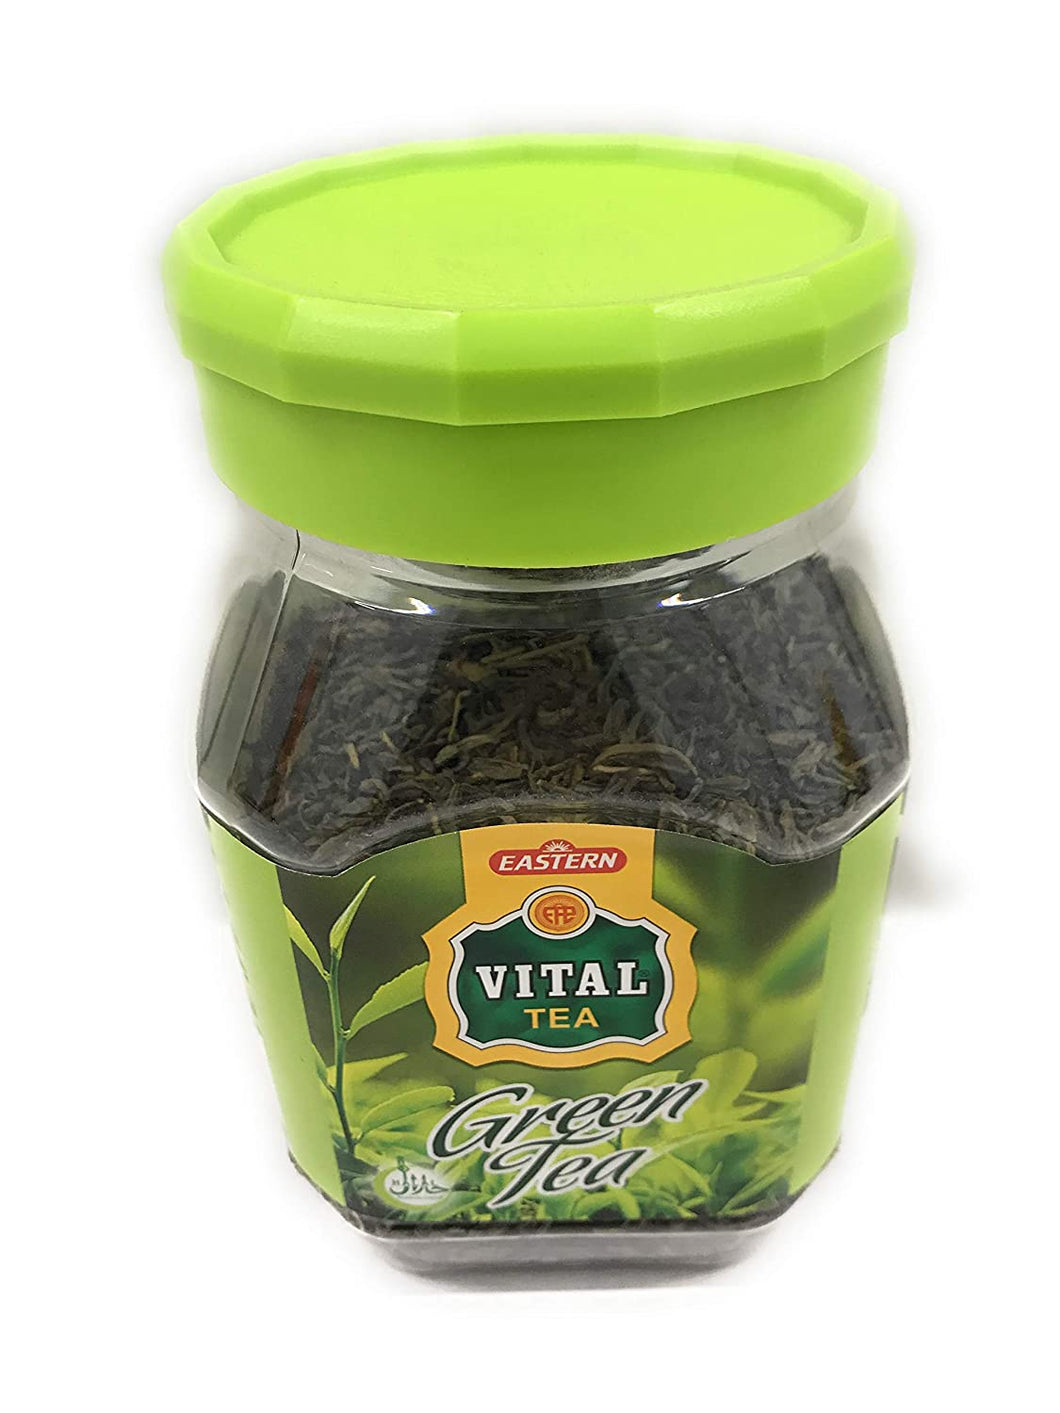 Vital Tea Green Tea Natural by Eastern Products 250 Gram in a Plastic Jar